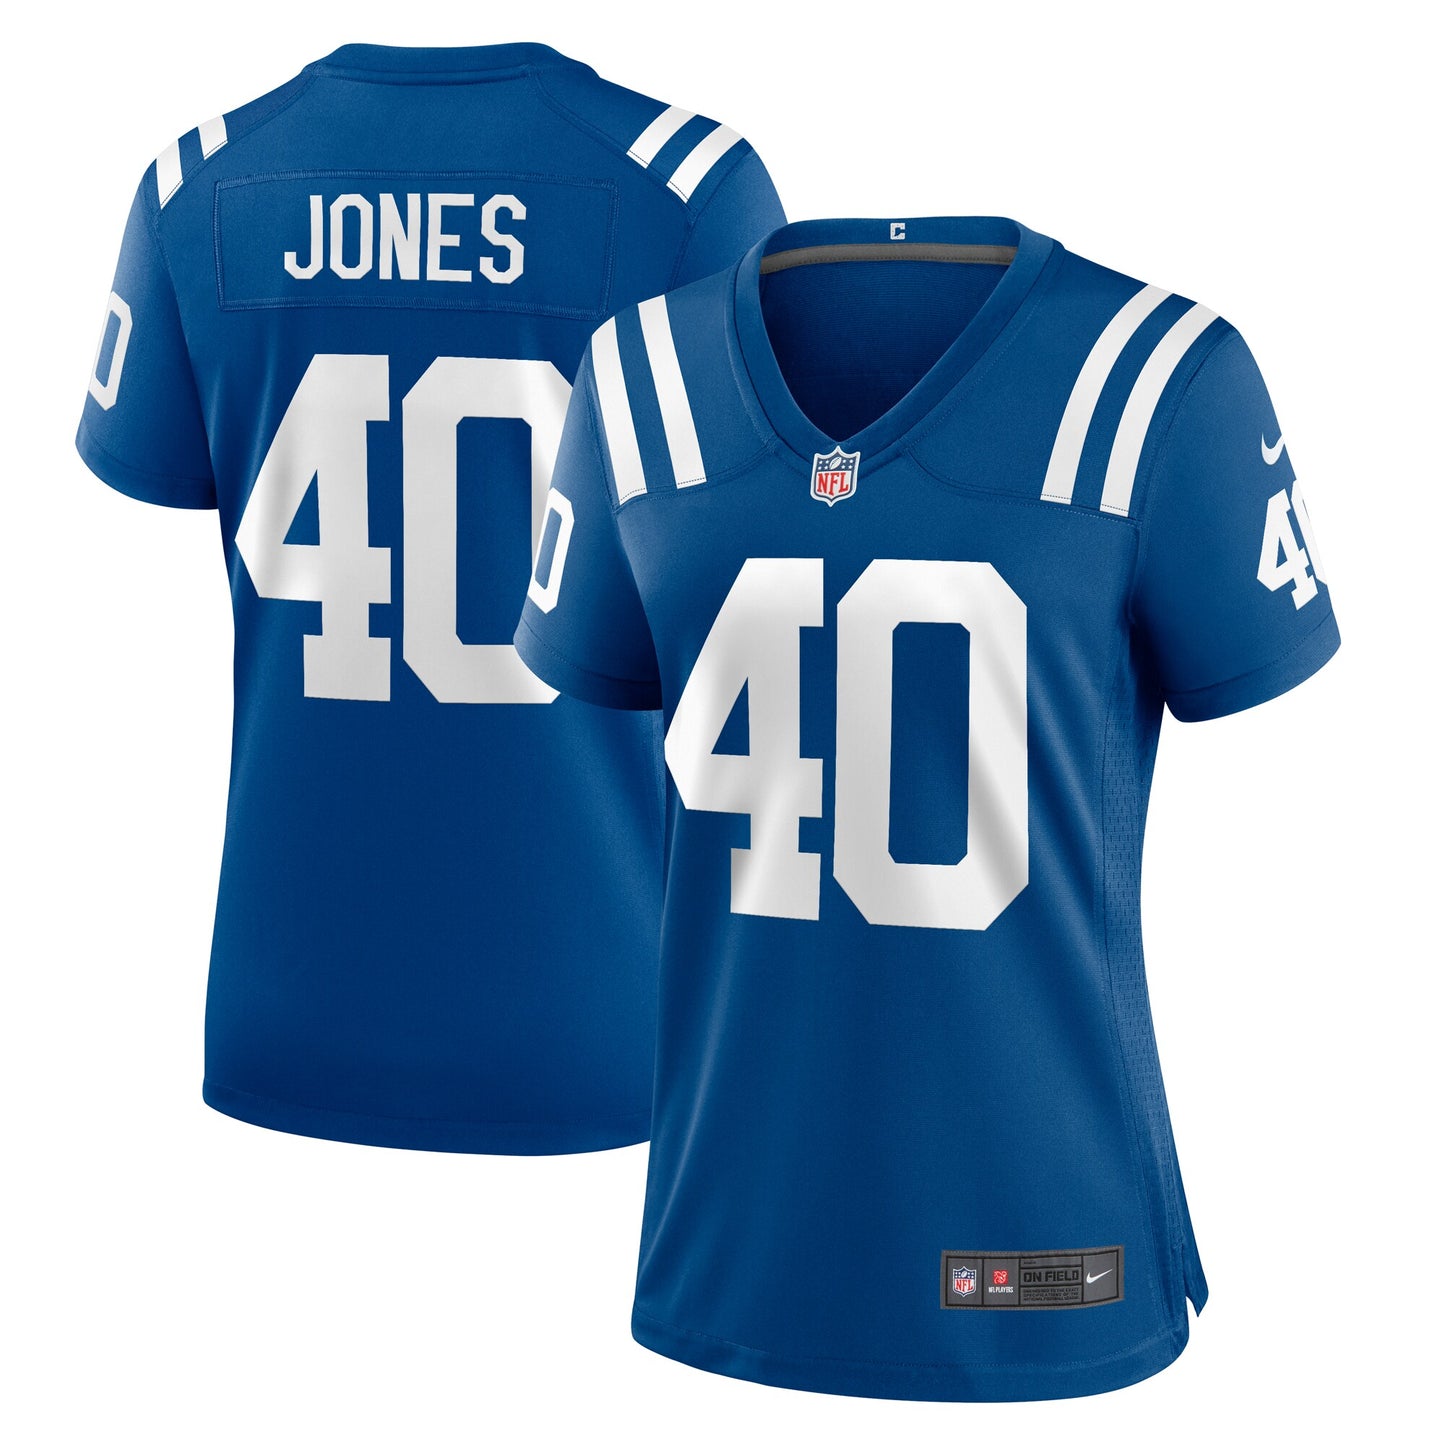 Jaylon Jones Indianapolis Colts Nike Women's Team Game Jersey - Royal